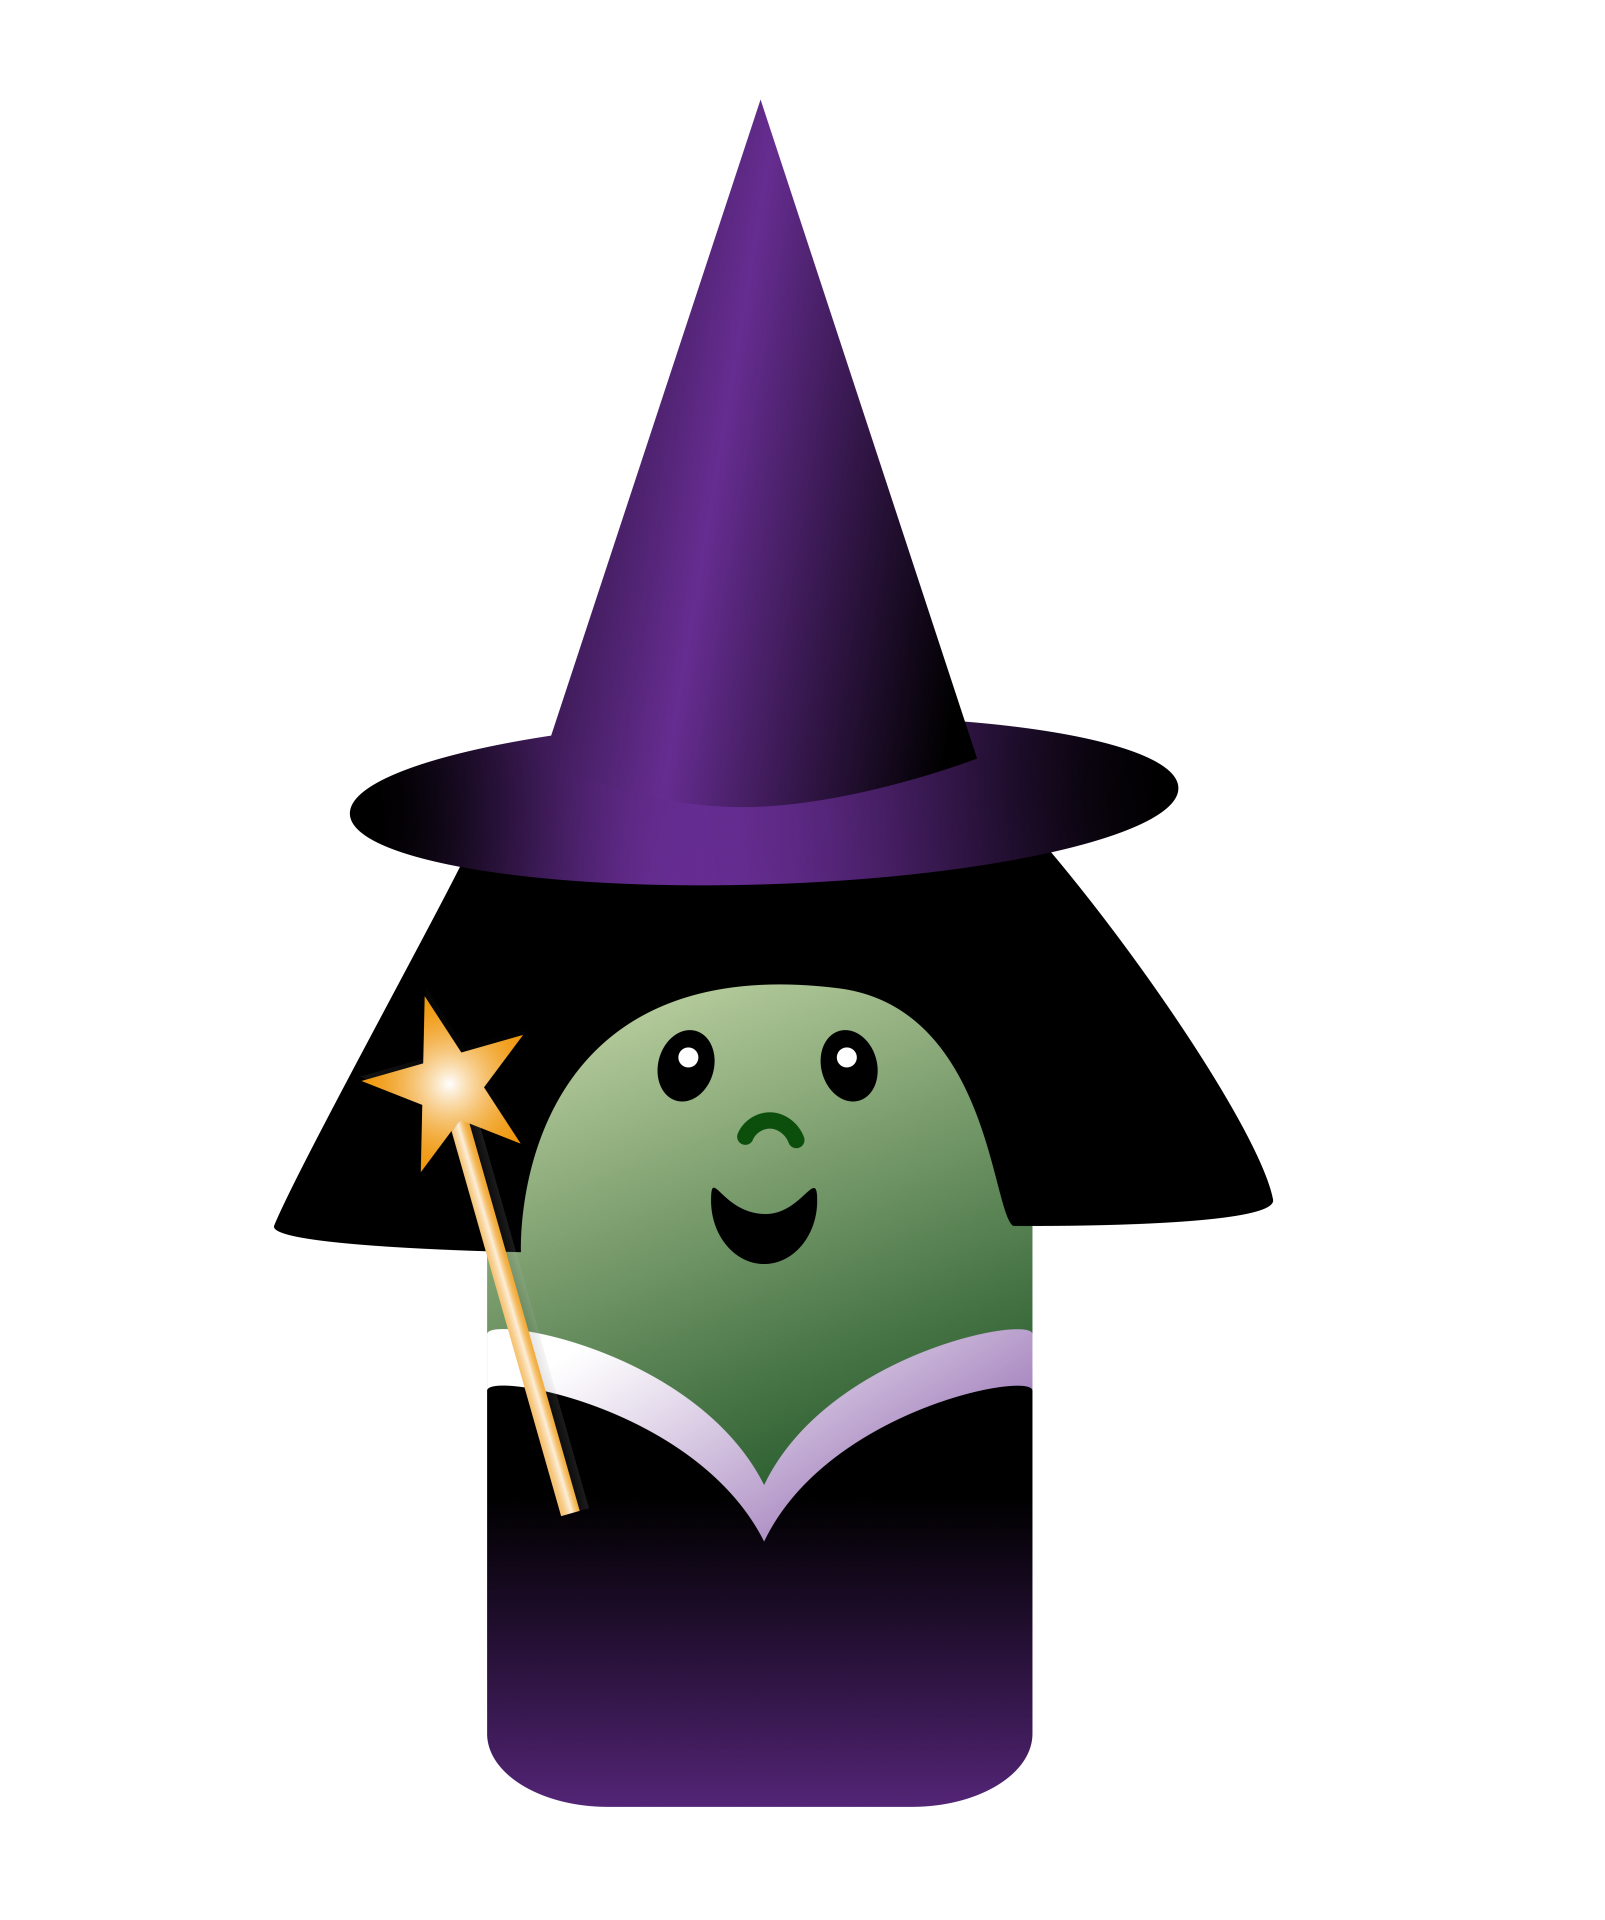 Halloween Witch Illustration